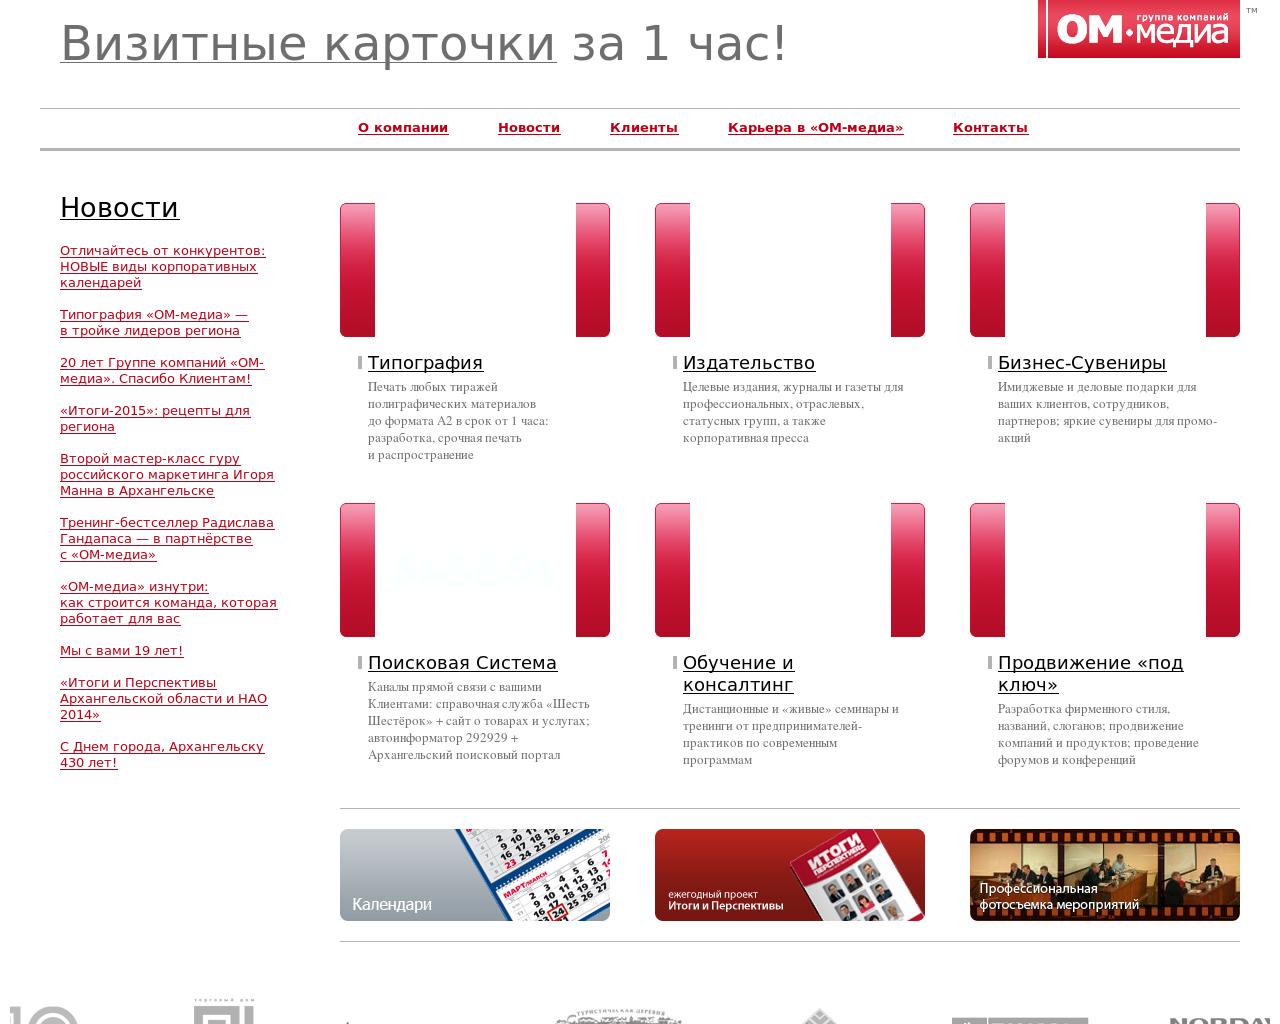 Изображение сайта ommedia.ru в разрешении 1280x1024